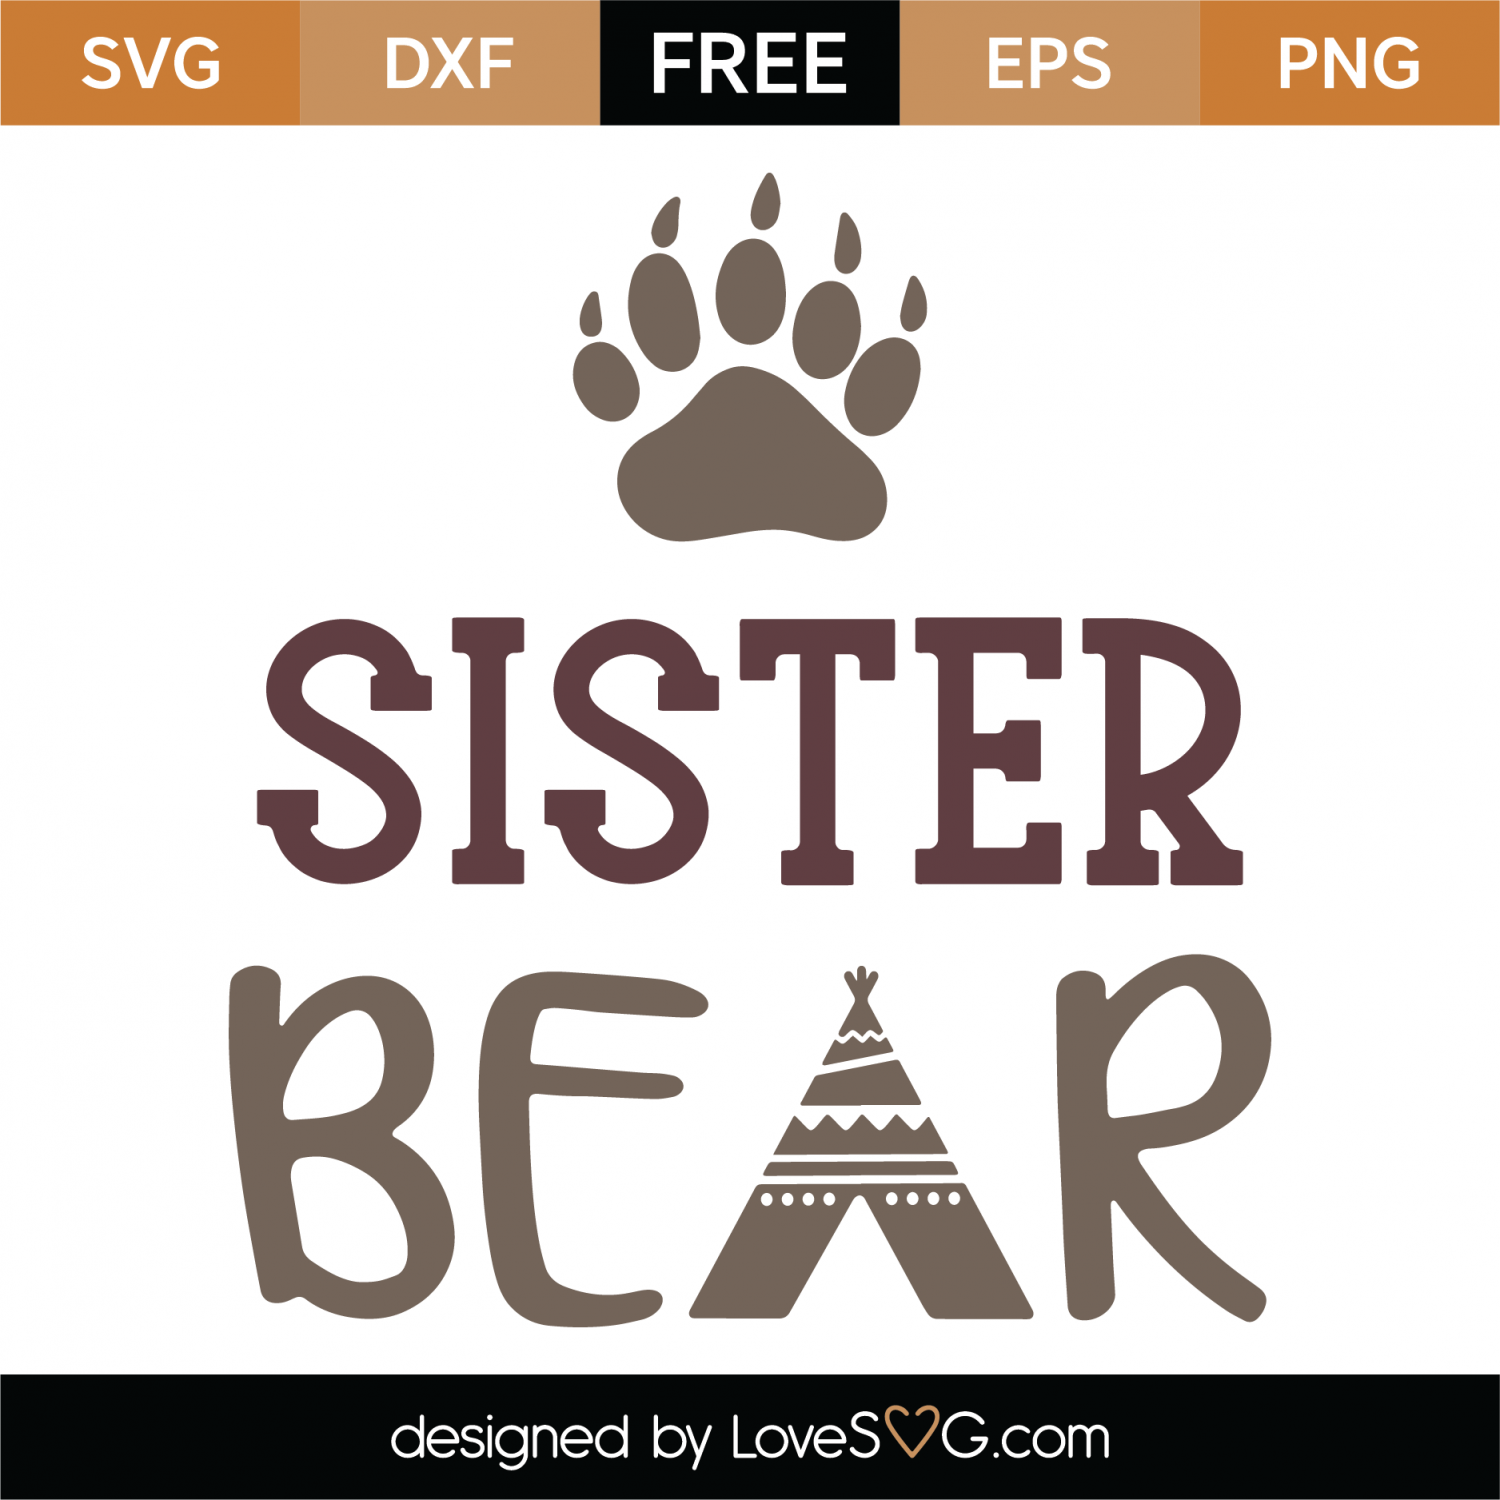 Download Free Sister Bear SVG Cut File | Lovesvg.com